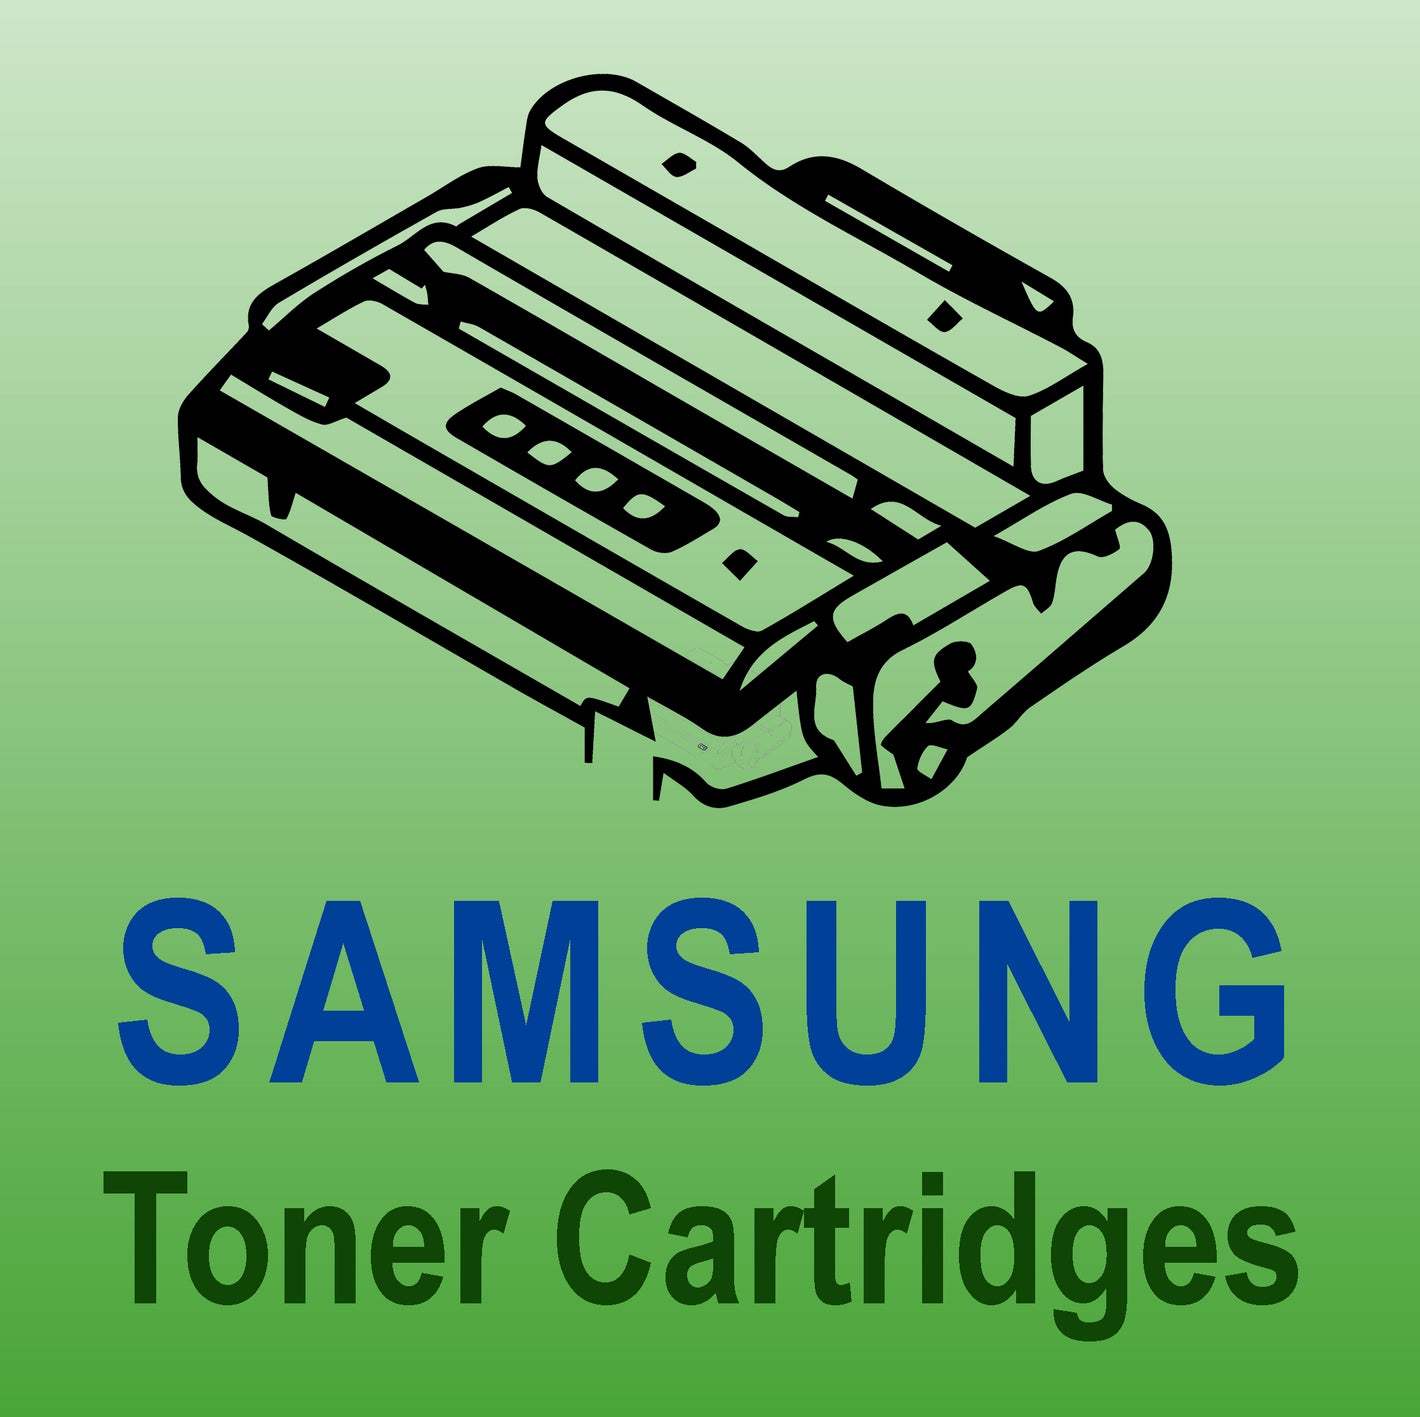 Samsung Toner Cartridges